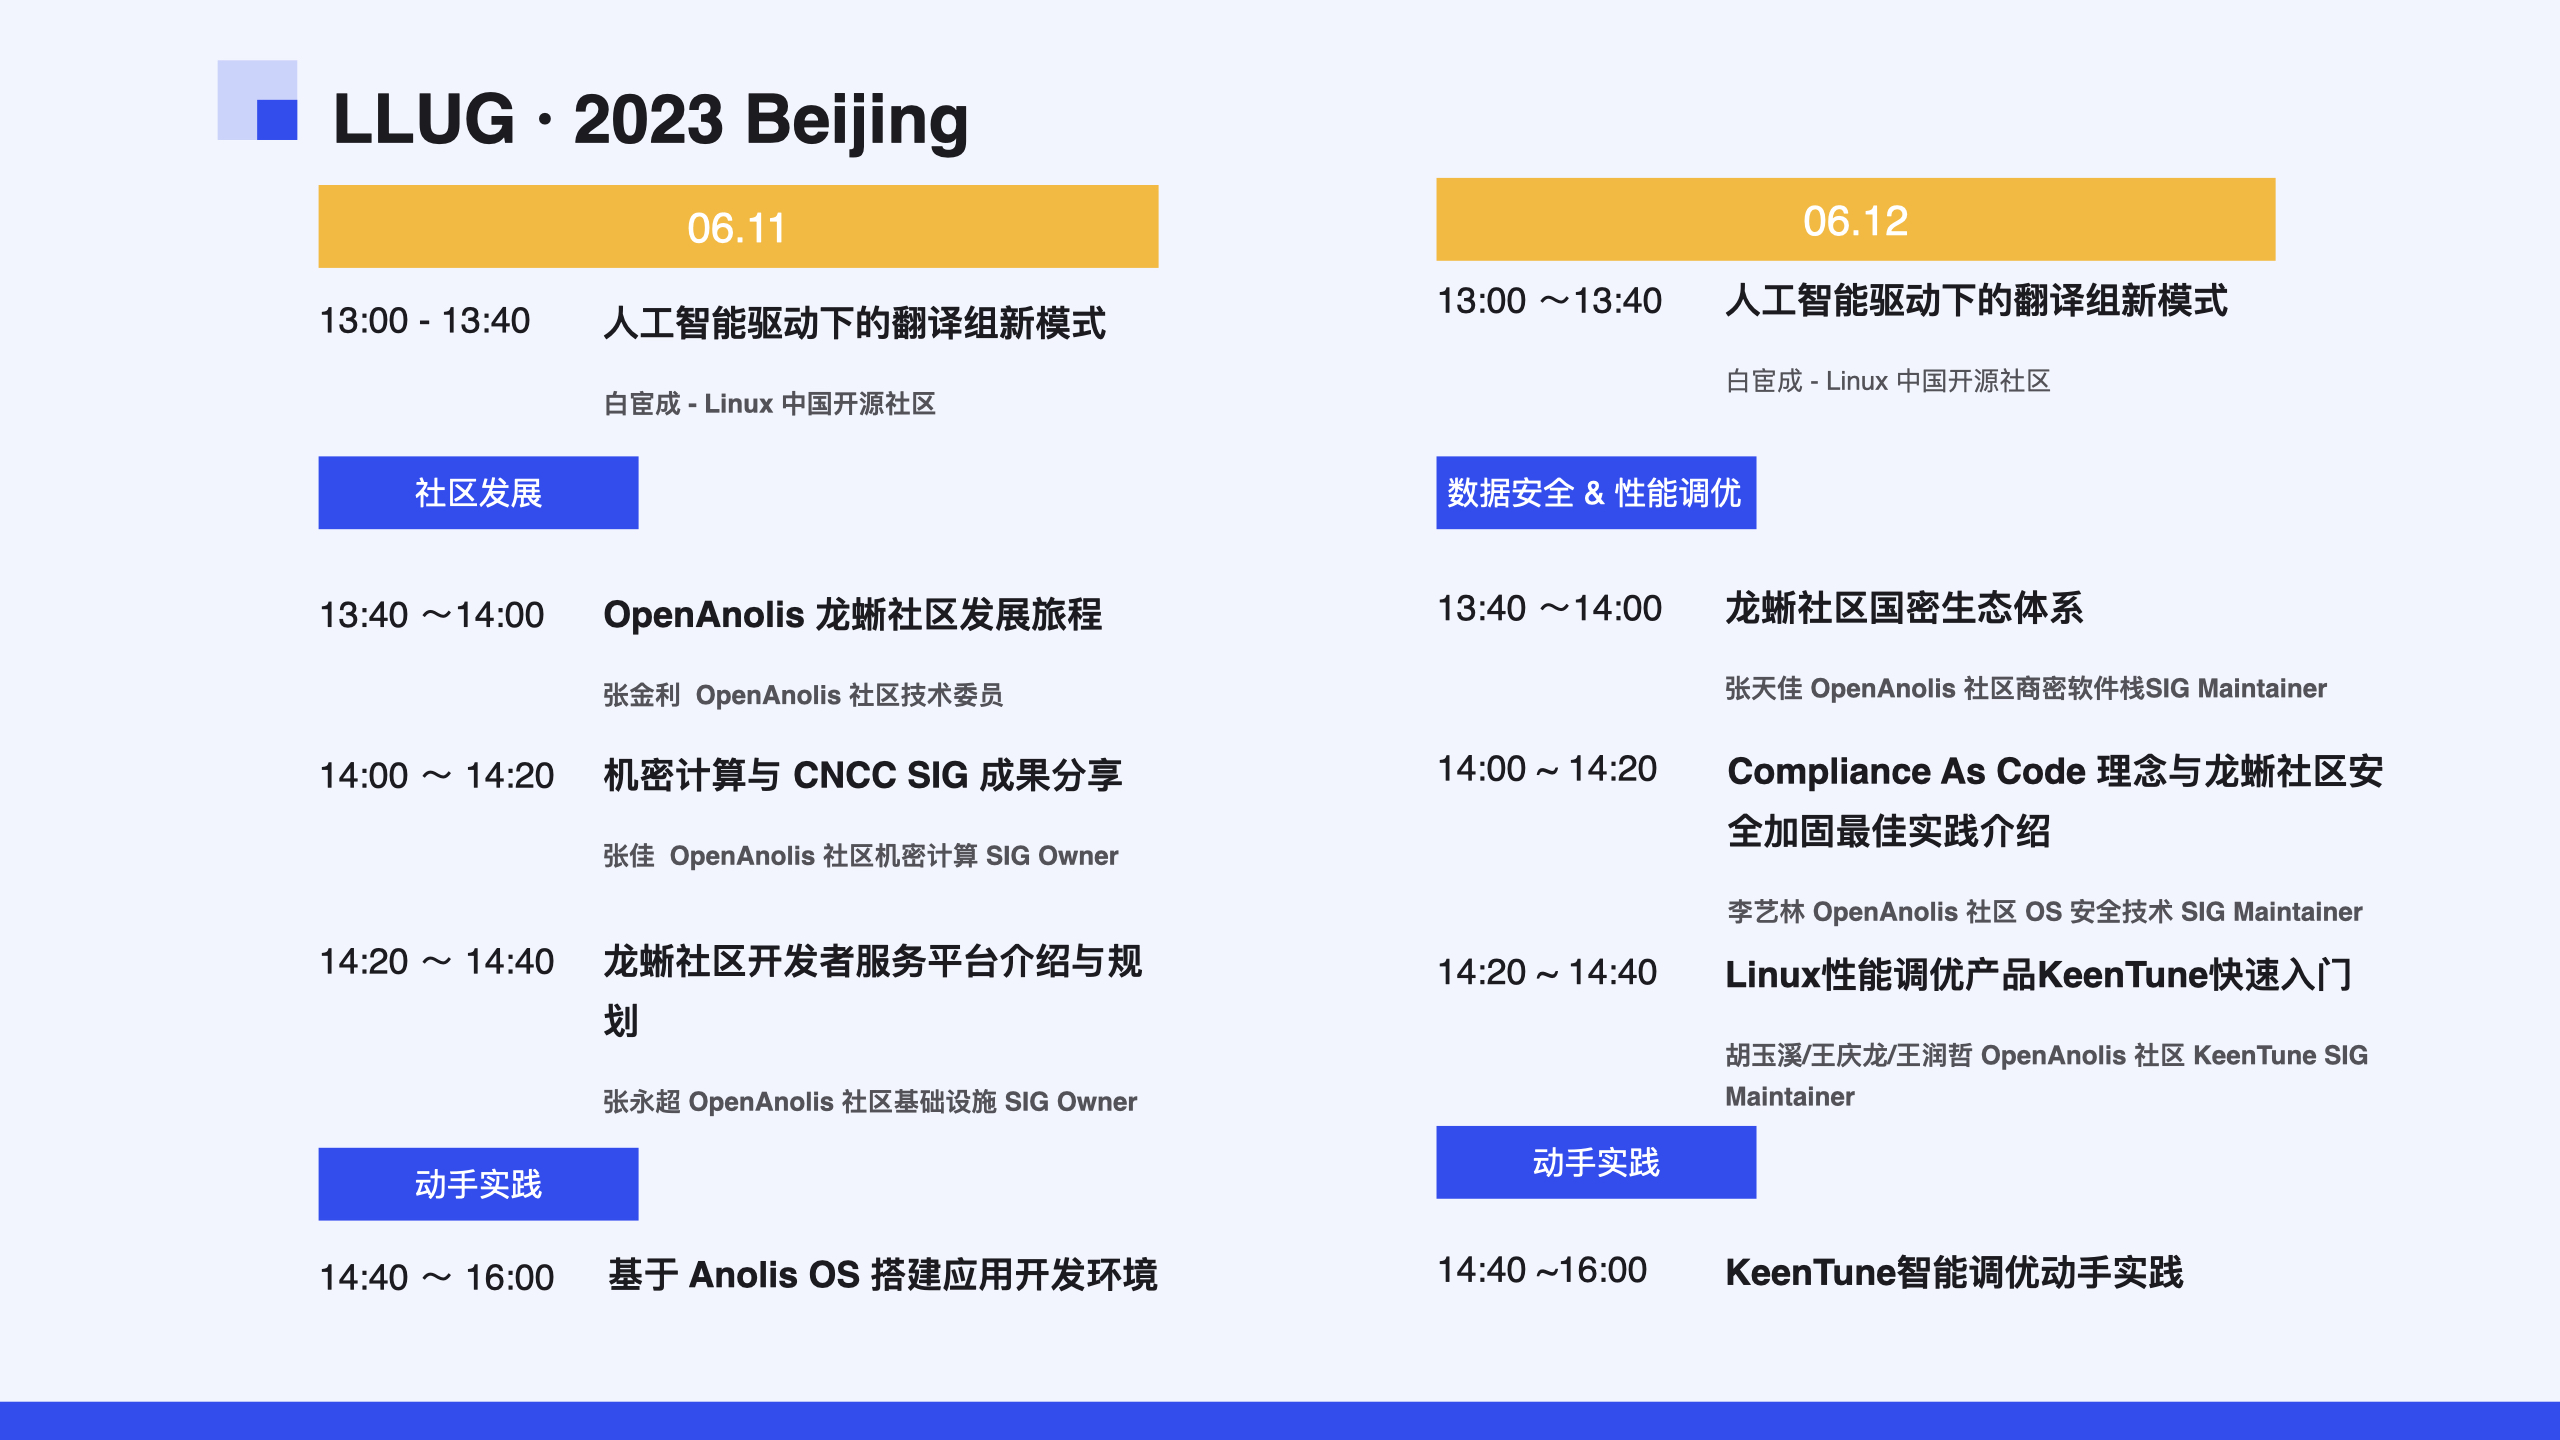 Linux 爱好者线下沙龙：LLUG 2023 ，北京 · 开聚